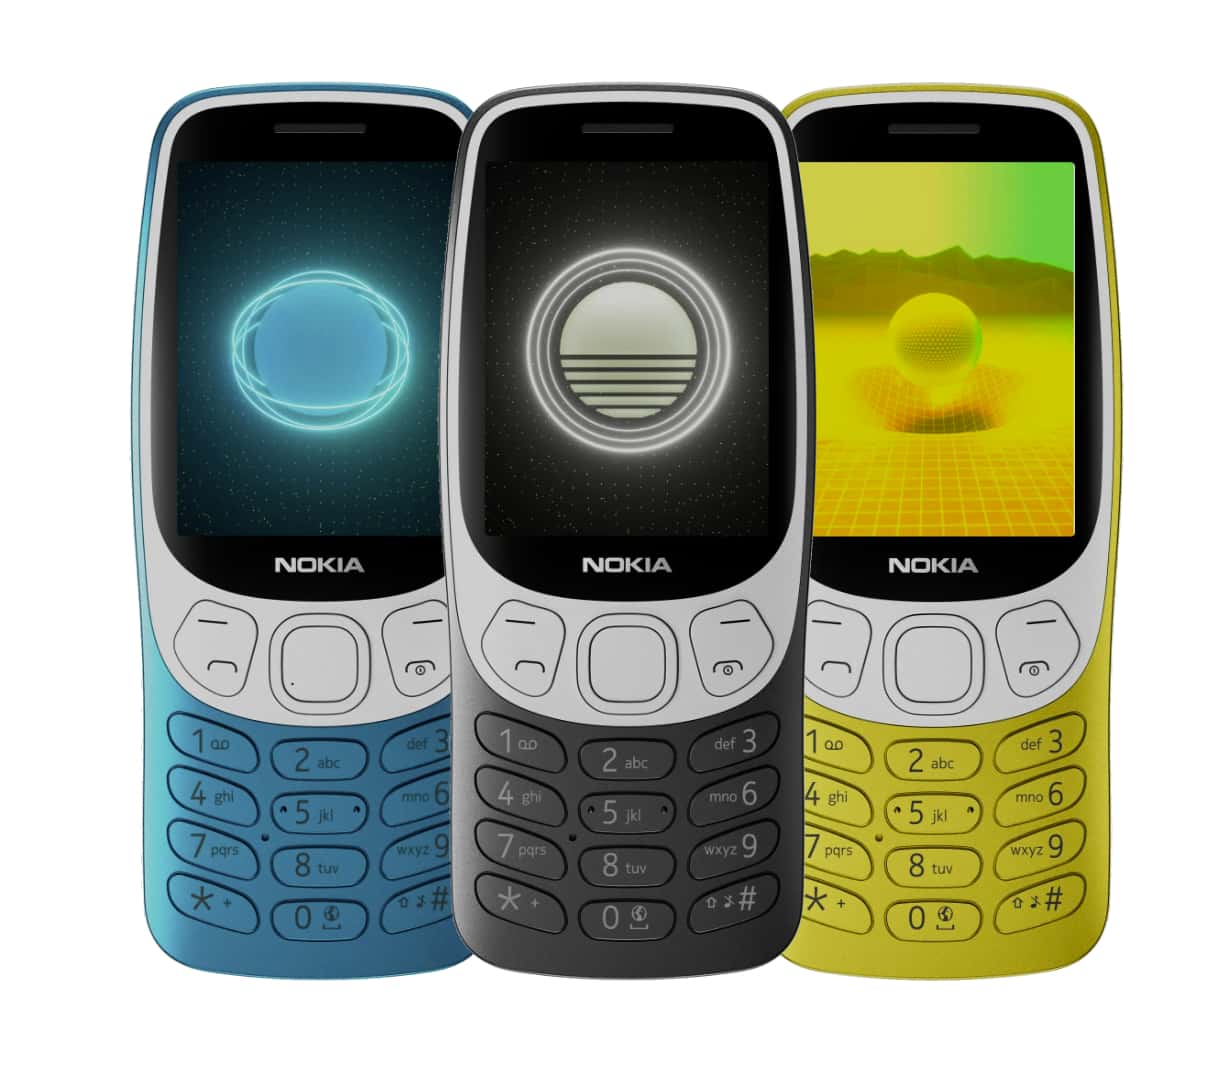 Nuevo modelo de Nokia 3210